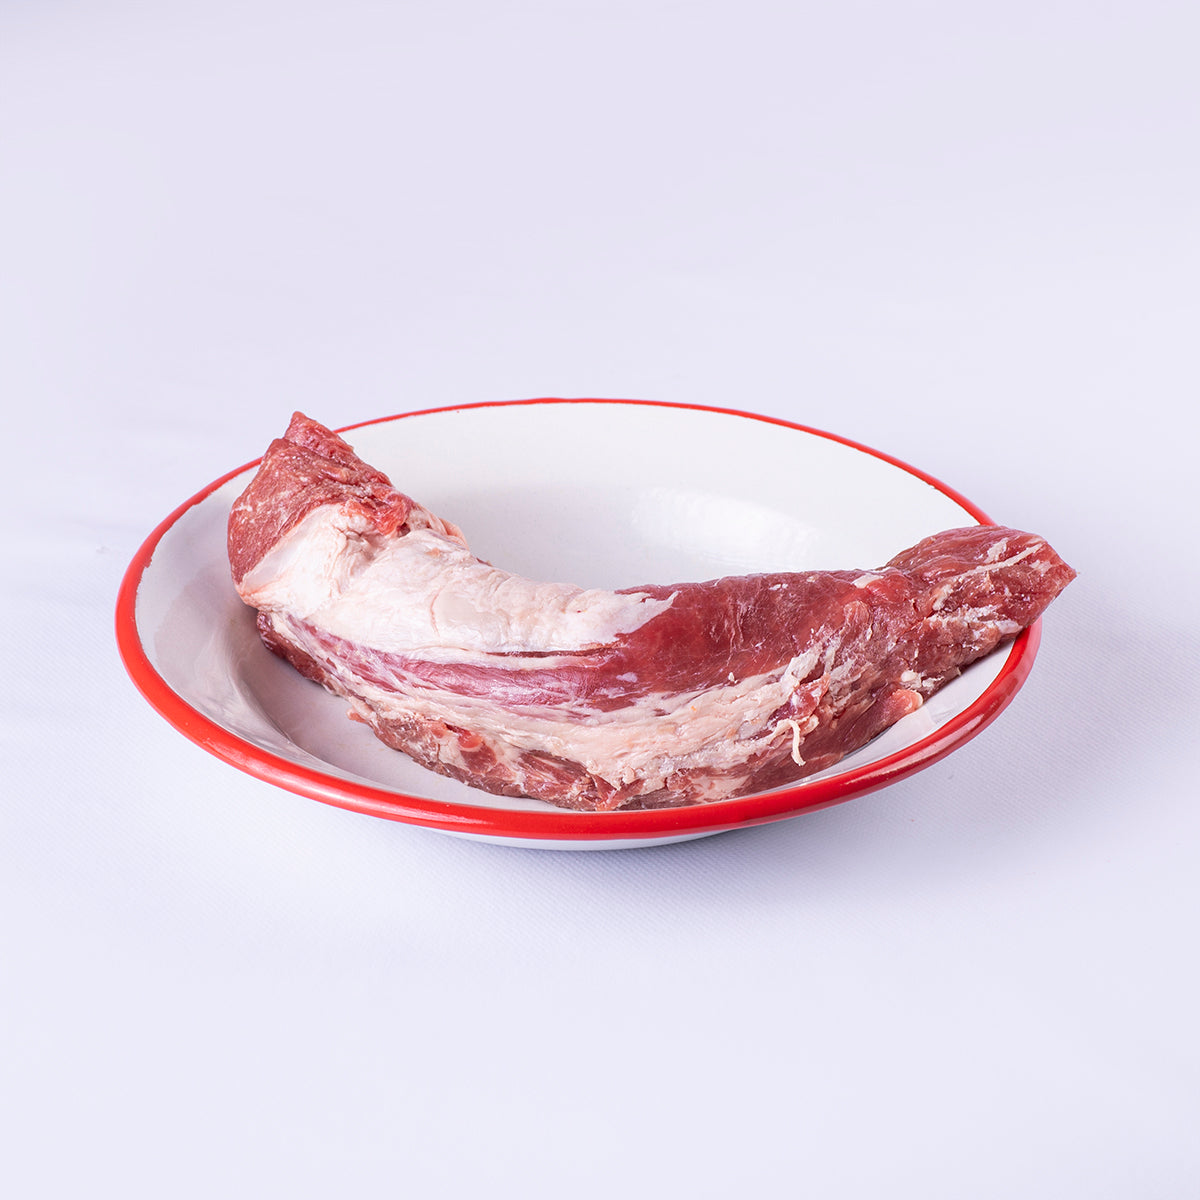 solomillo iberico extremeño sobre plato blanco con filo rojo